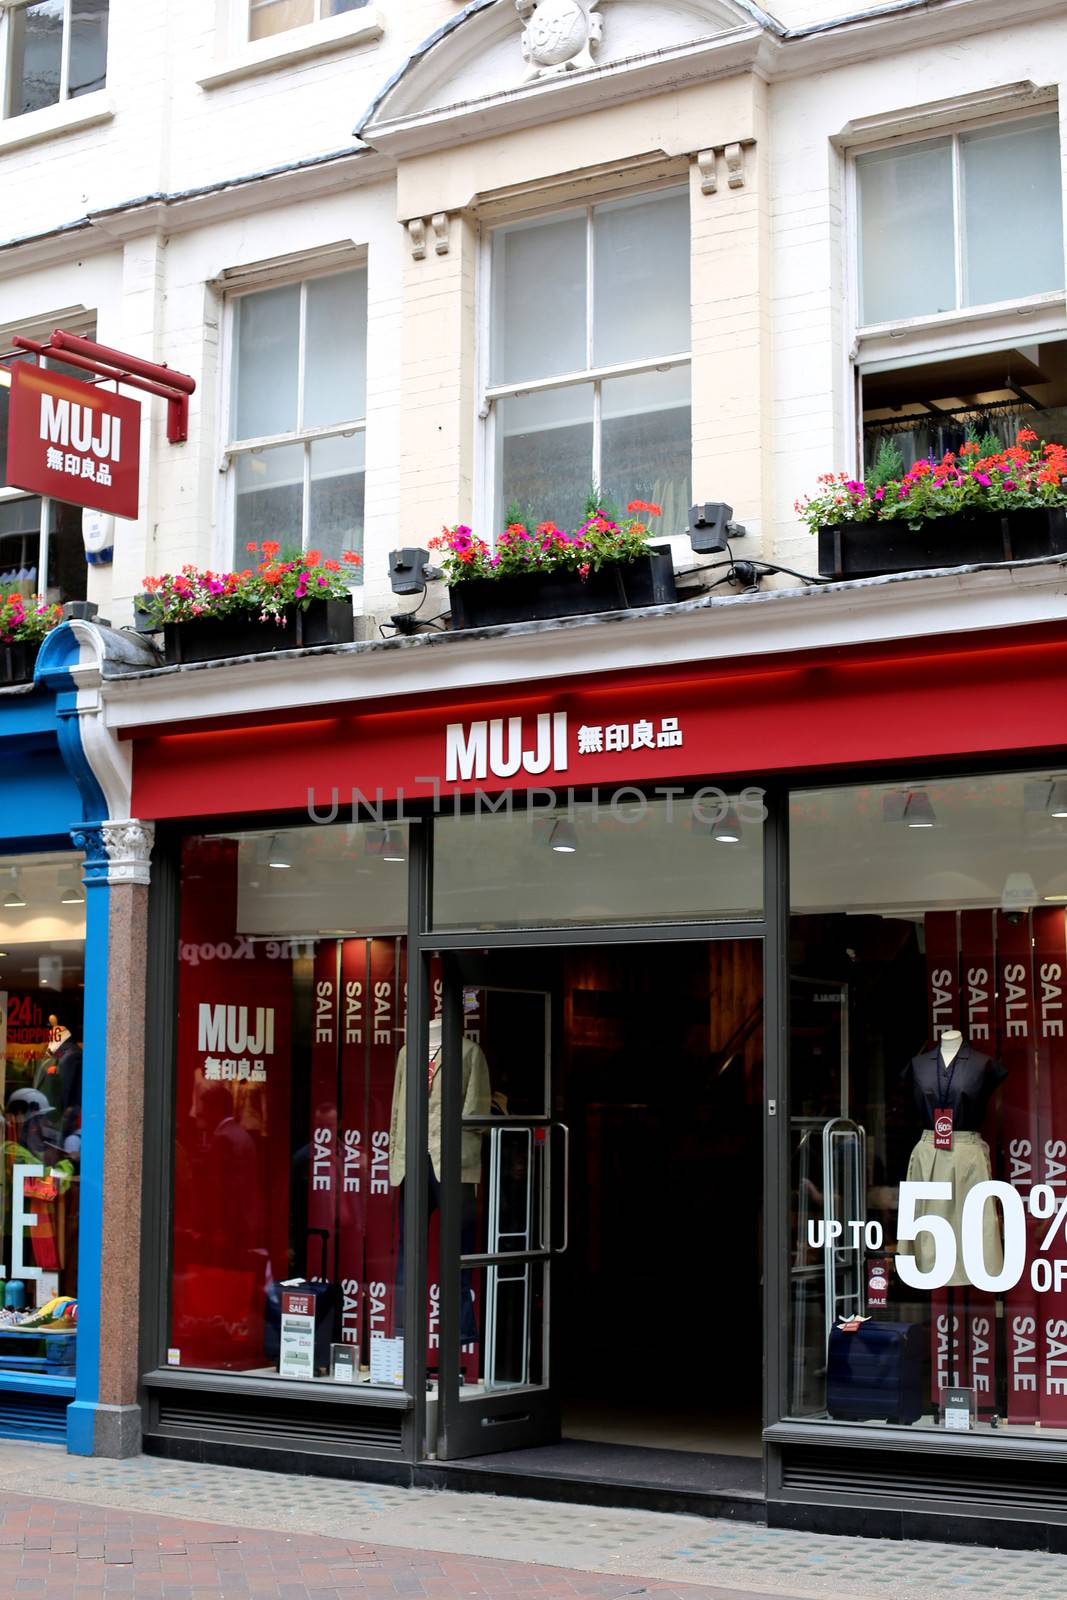 Muji Shop Front Carnaby Street London by Whiteboxmedia